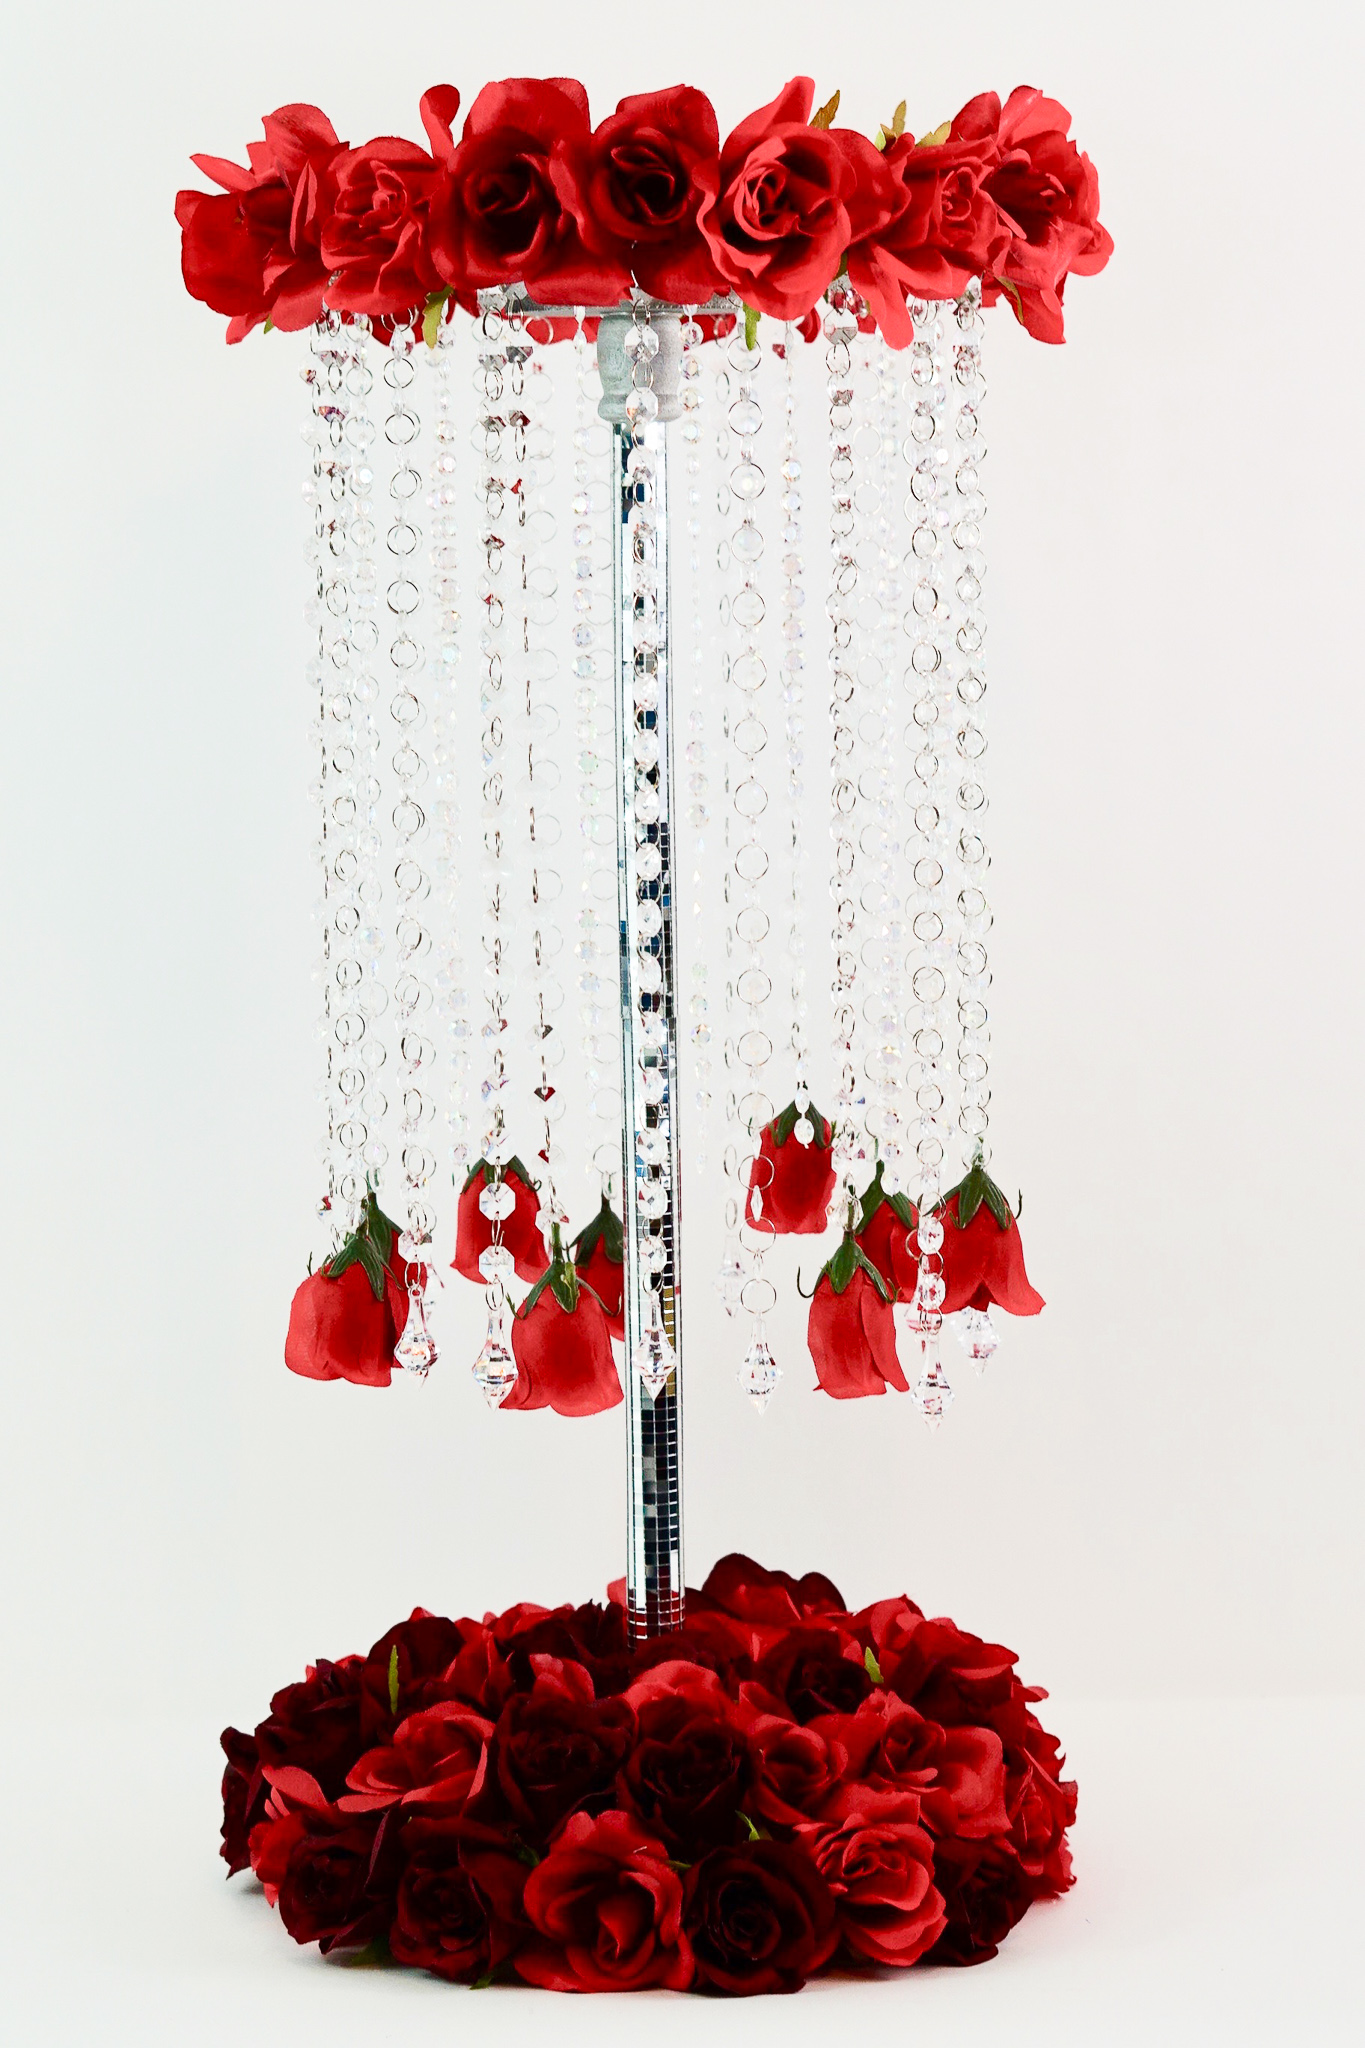 DIY Tall Rose Chandelier Wedding Centerpiece